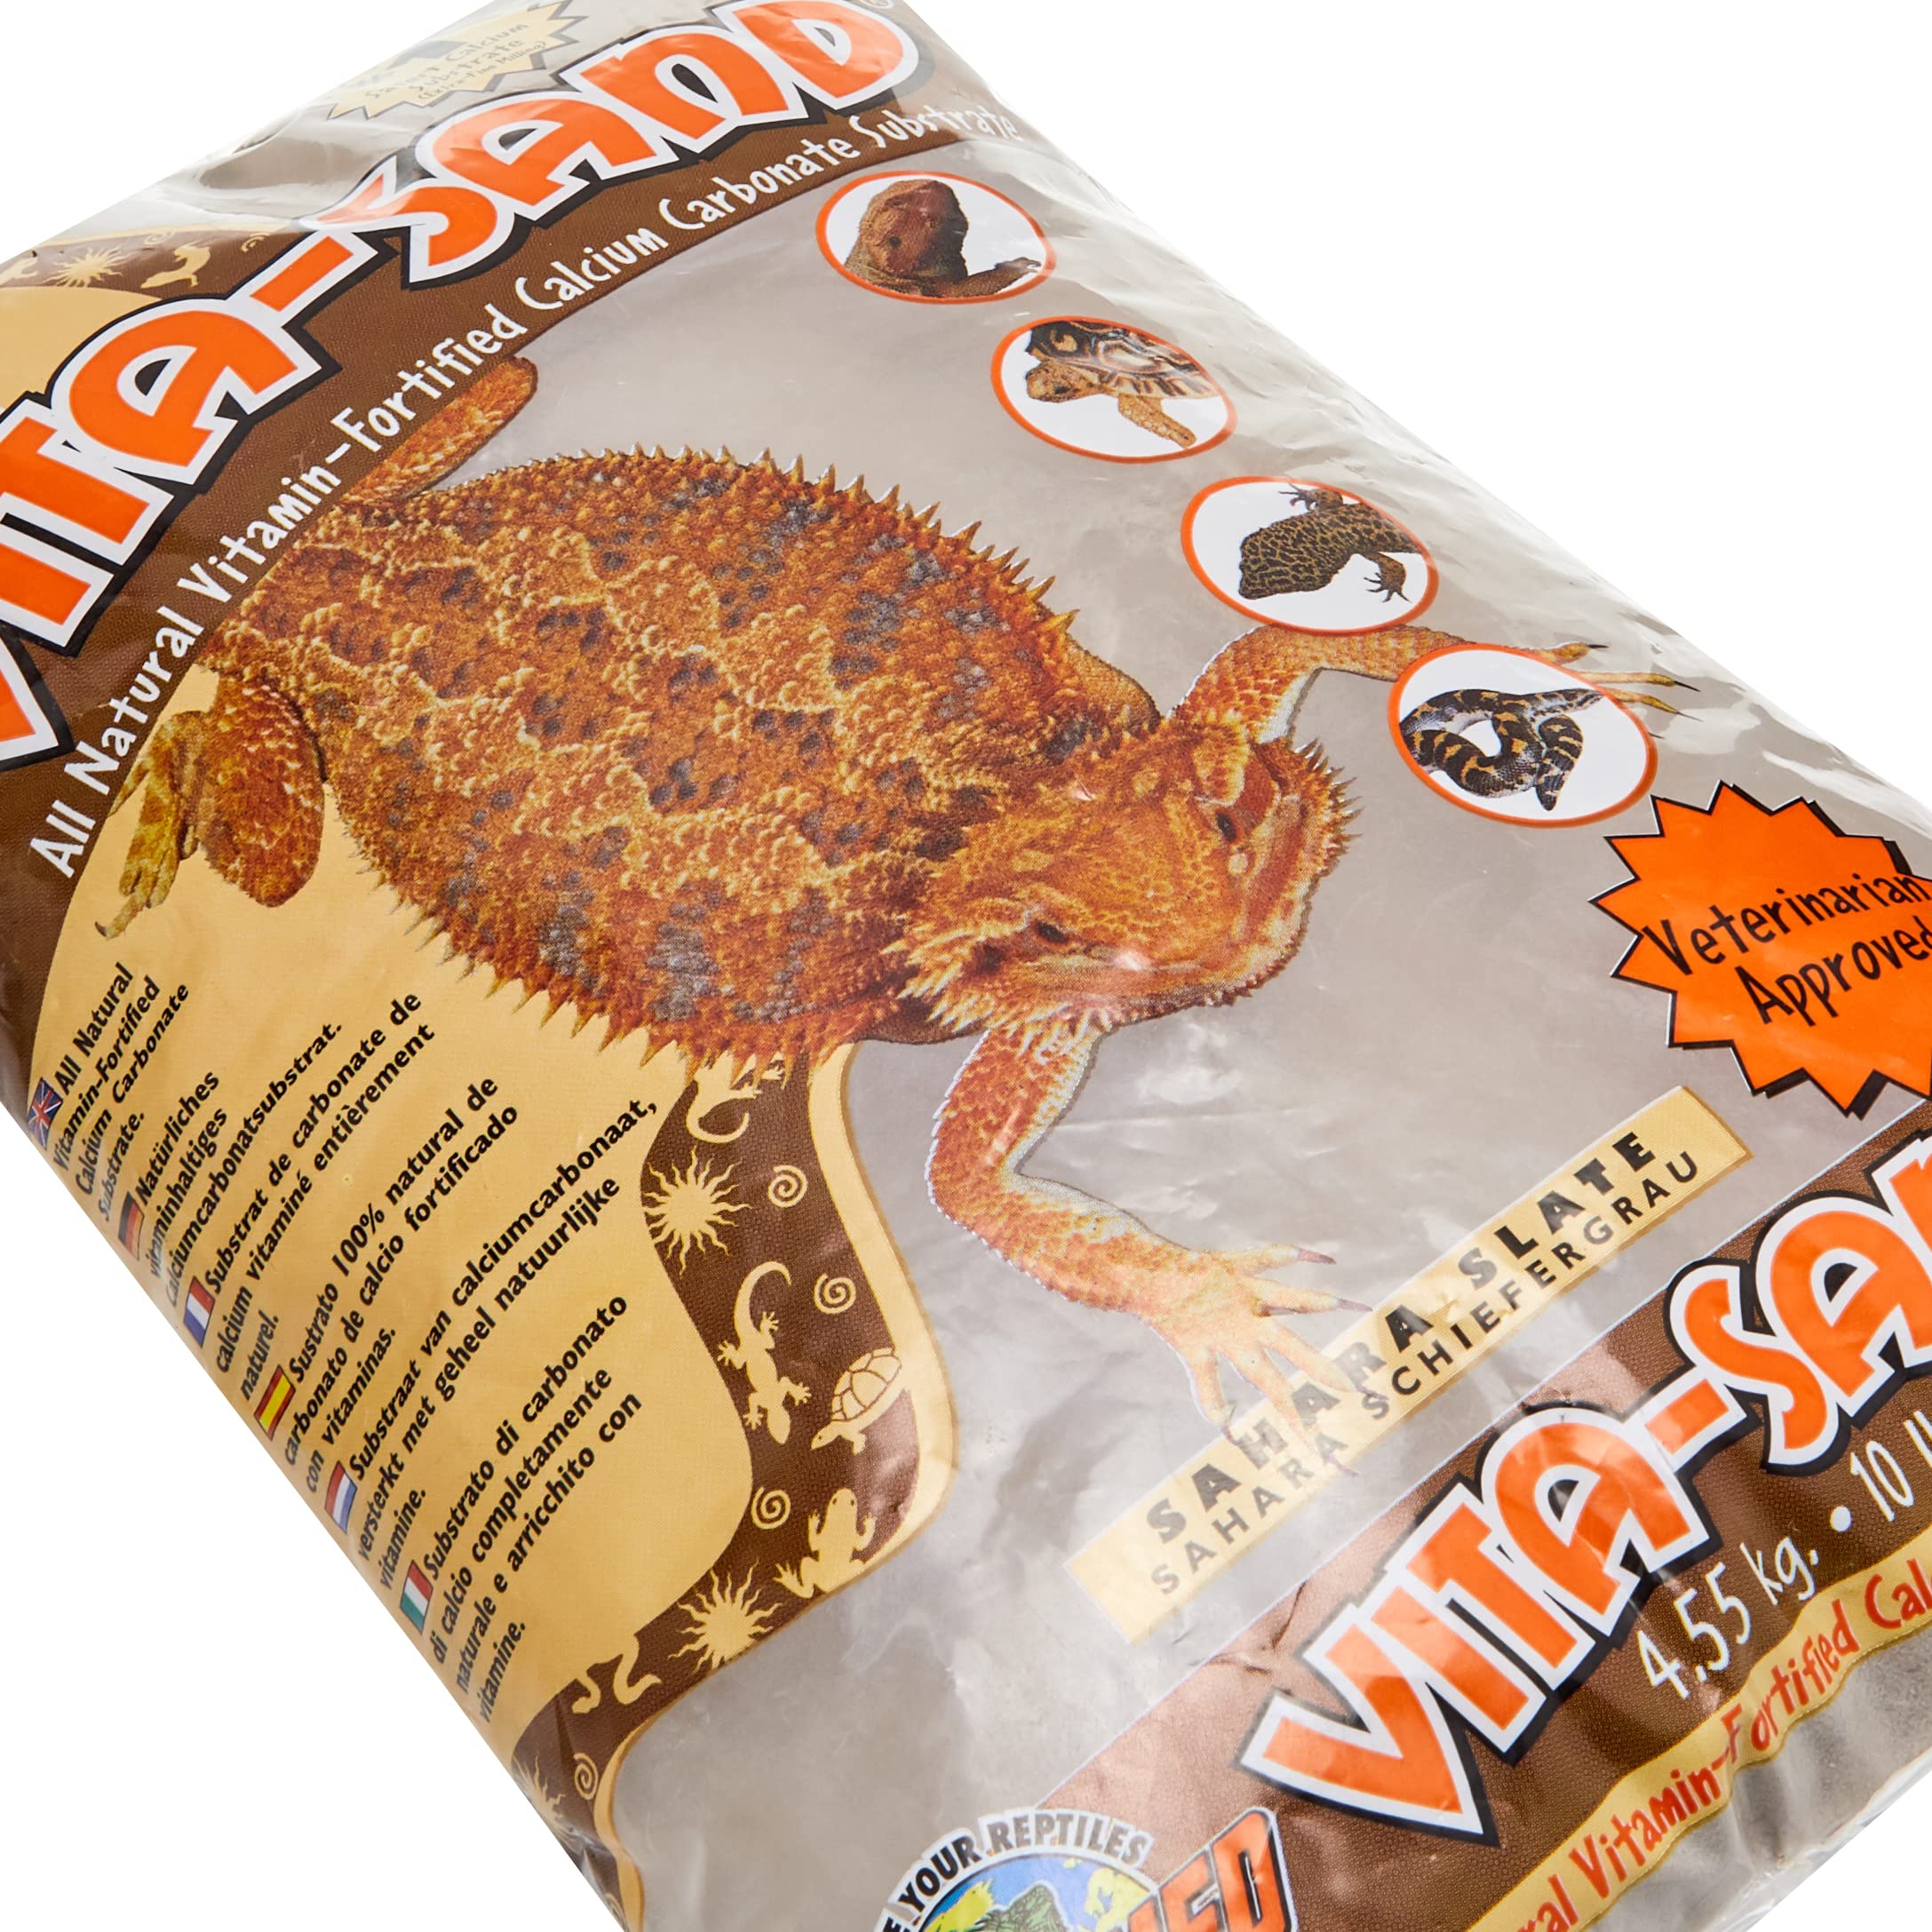 Zoo Med Laboratories Vita Sand Natural Calcium Carbonate Reptile Substrate - Outback Orange - 10 Lbs  